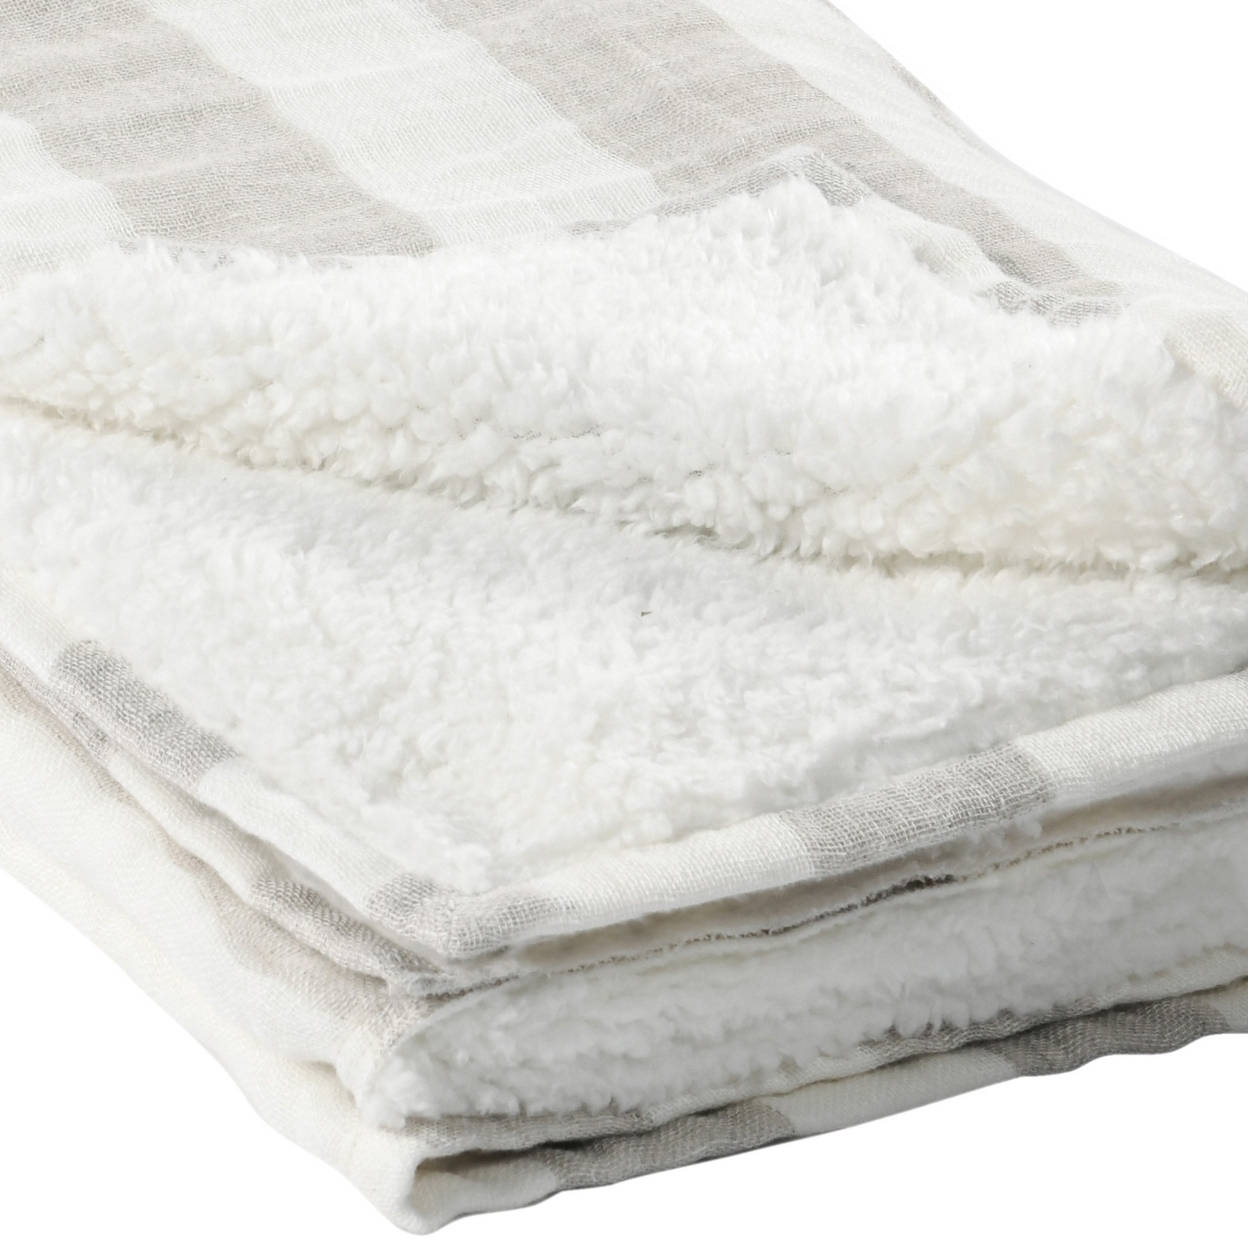 50 Inch Soft Linen Throw Blanket, Woven Wide Striped Pattern, White, Gray- Saltoro Sherpi